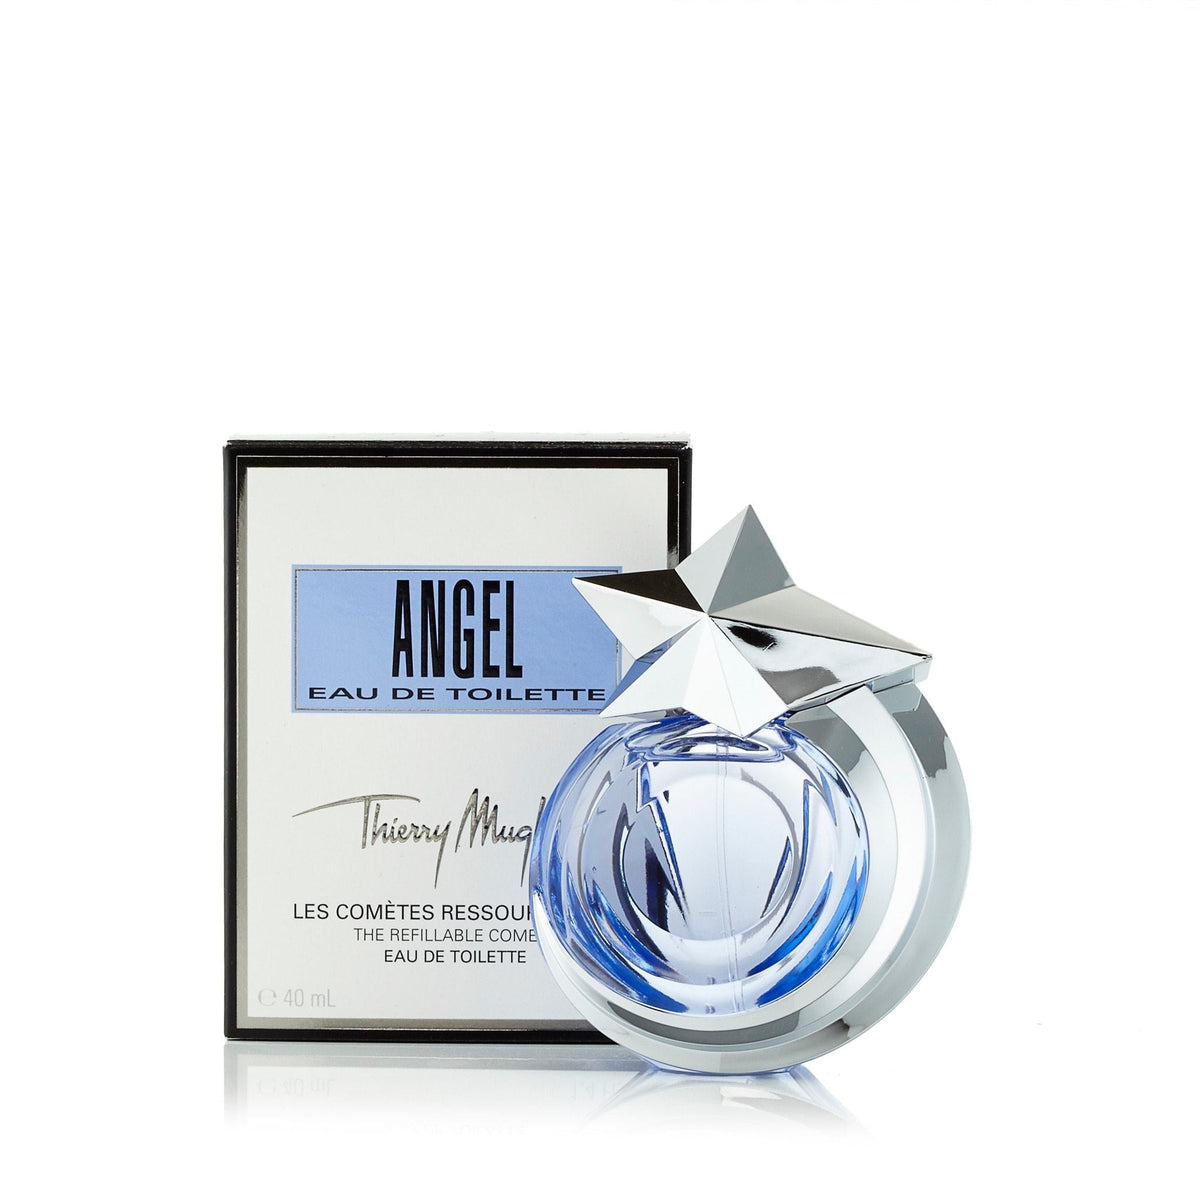 Angel Refillable Eau de Toilette Spray for Women by Thierry Mugler 1.4 oz.